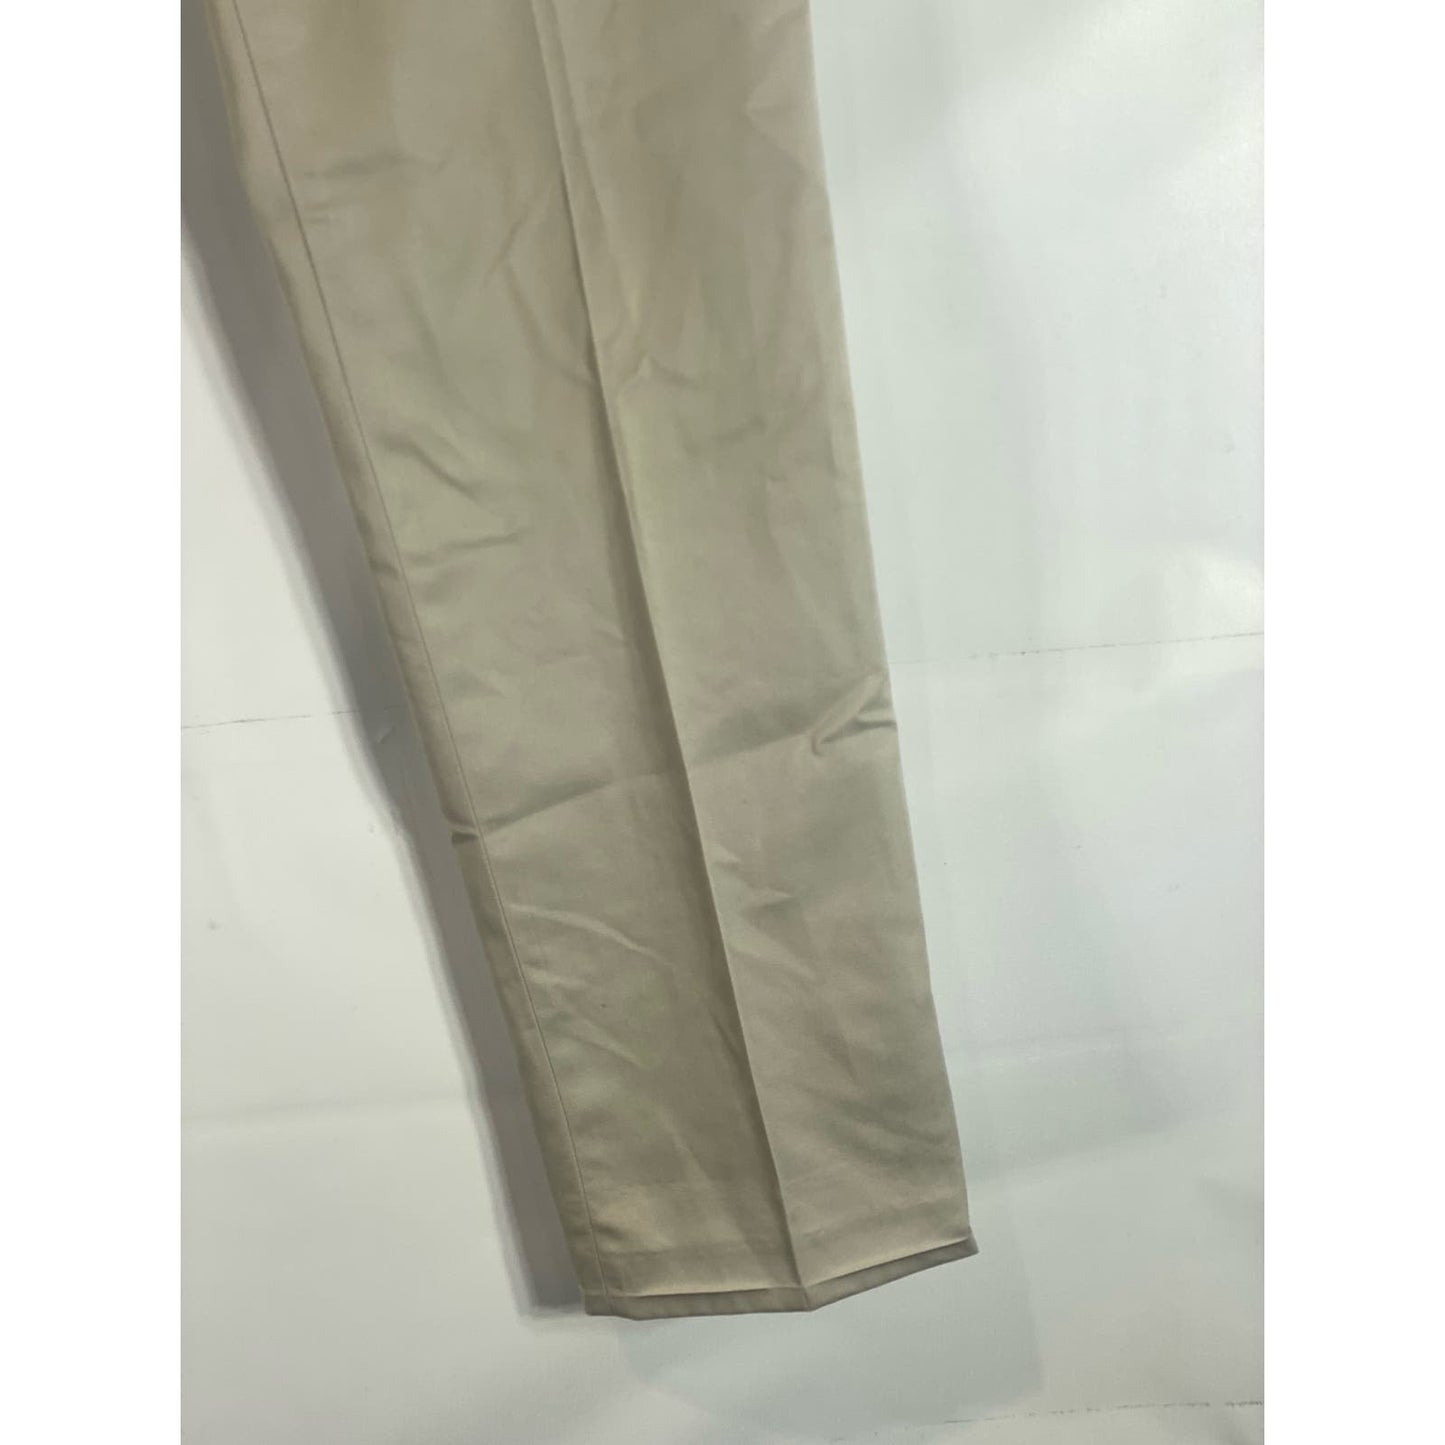 BANANA REPUBLIC Men's Beige Modern Slim-Fit Non-Iron Flat Front Pants SZ 30x32